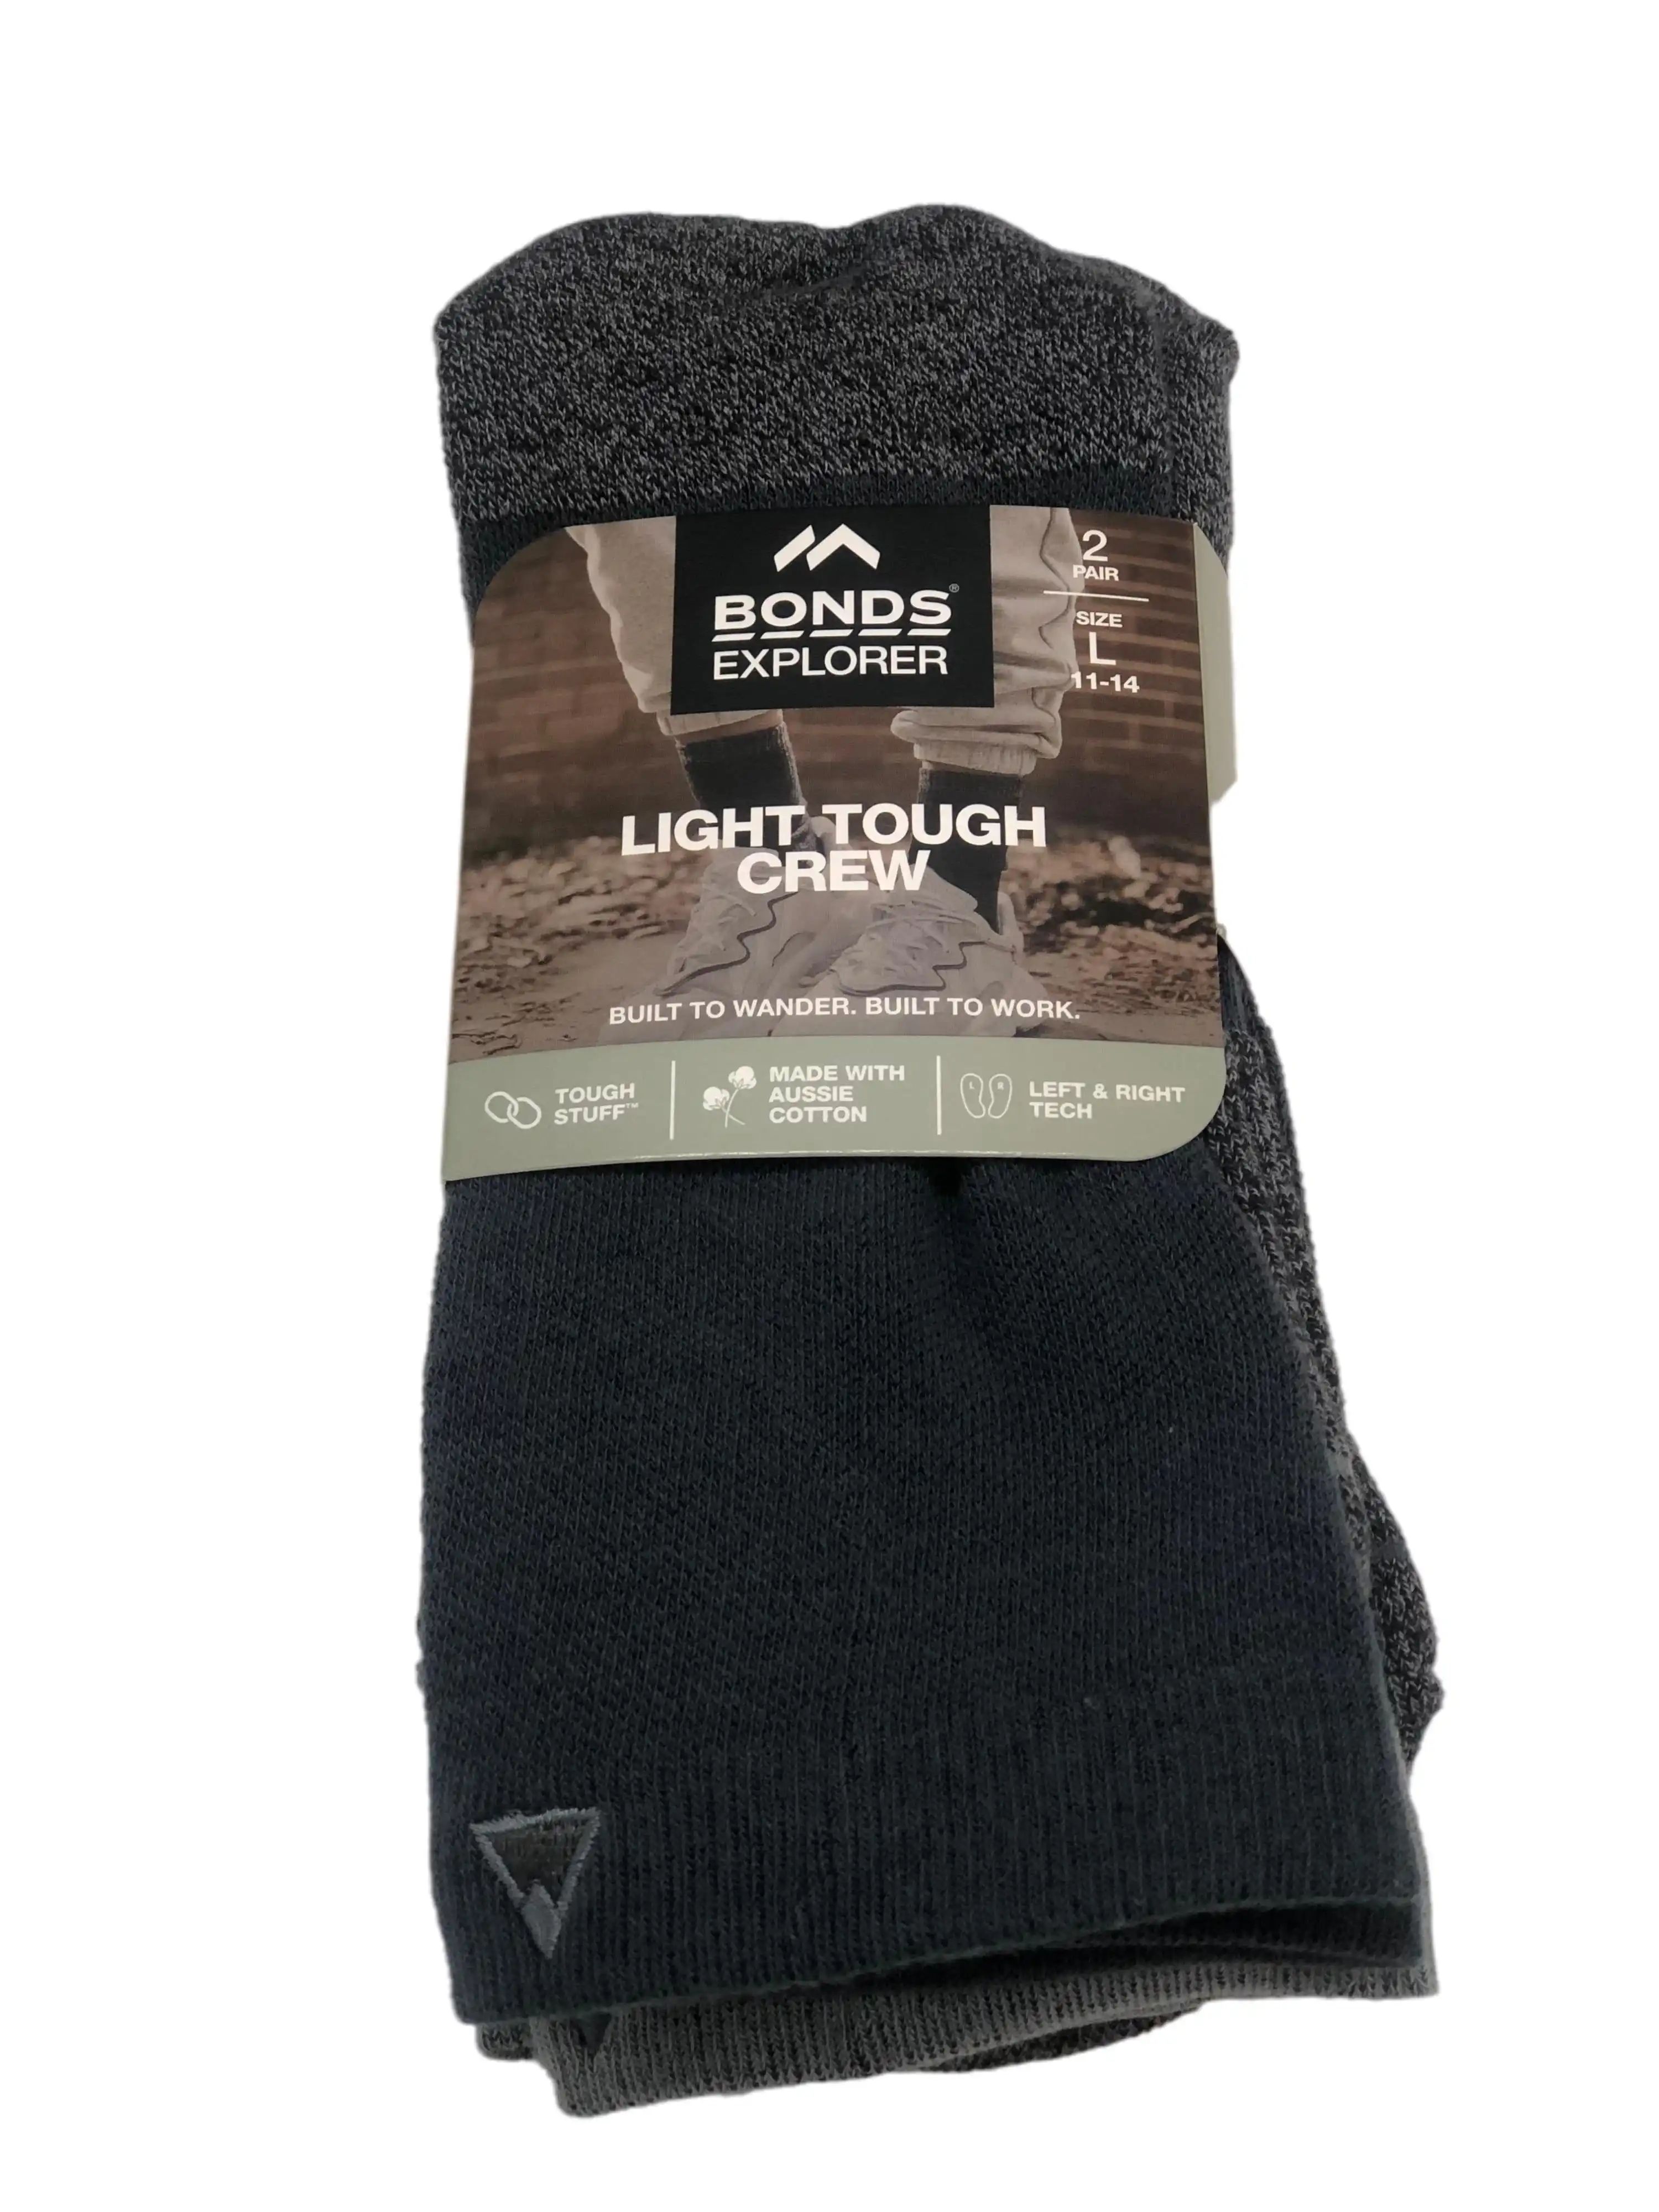 10 Pairs X Bonds Explorer Light Tough Crew Cotton Blend Socks - Grey 04K Print